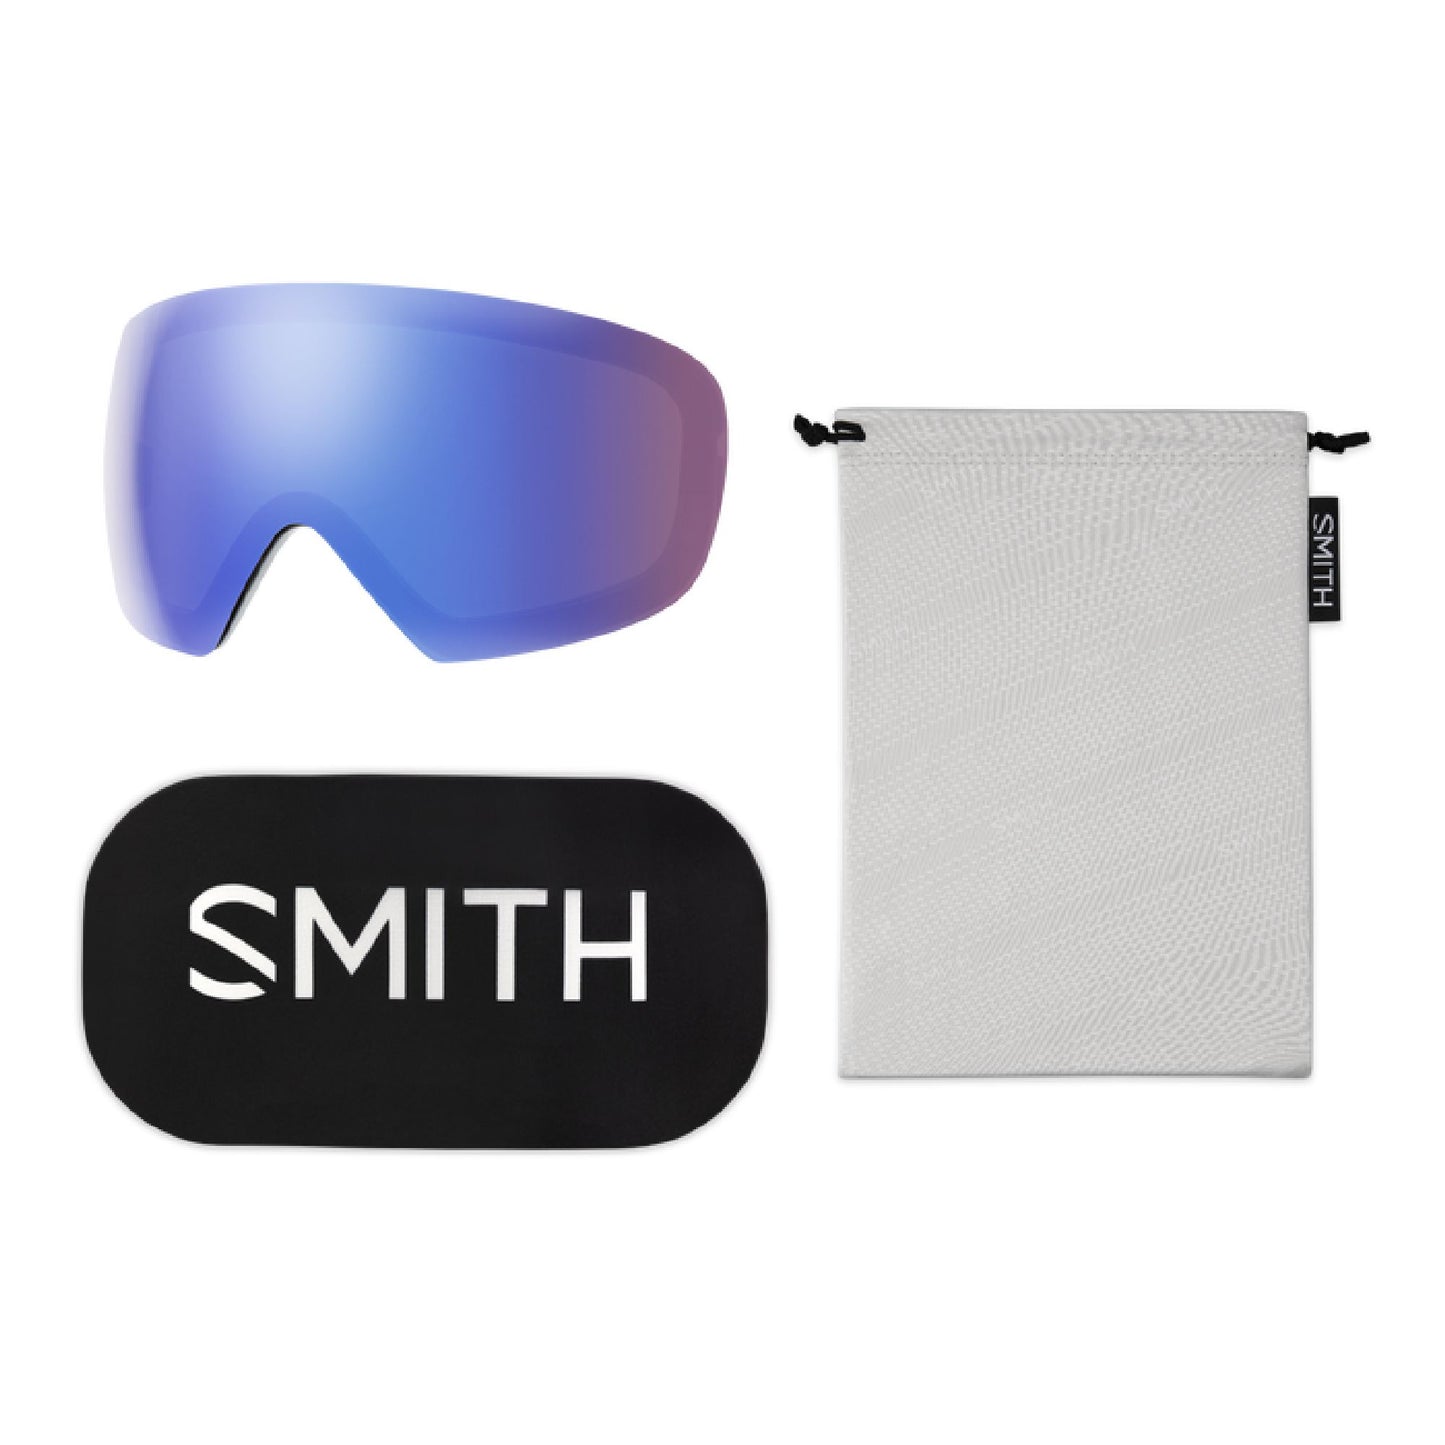 Smith I/O MAG S Snow Goggle Glacier / ChromaPop Everyday Violet Mirror Snow Goggles